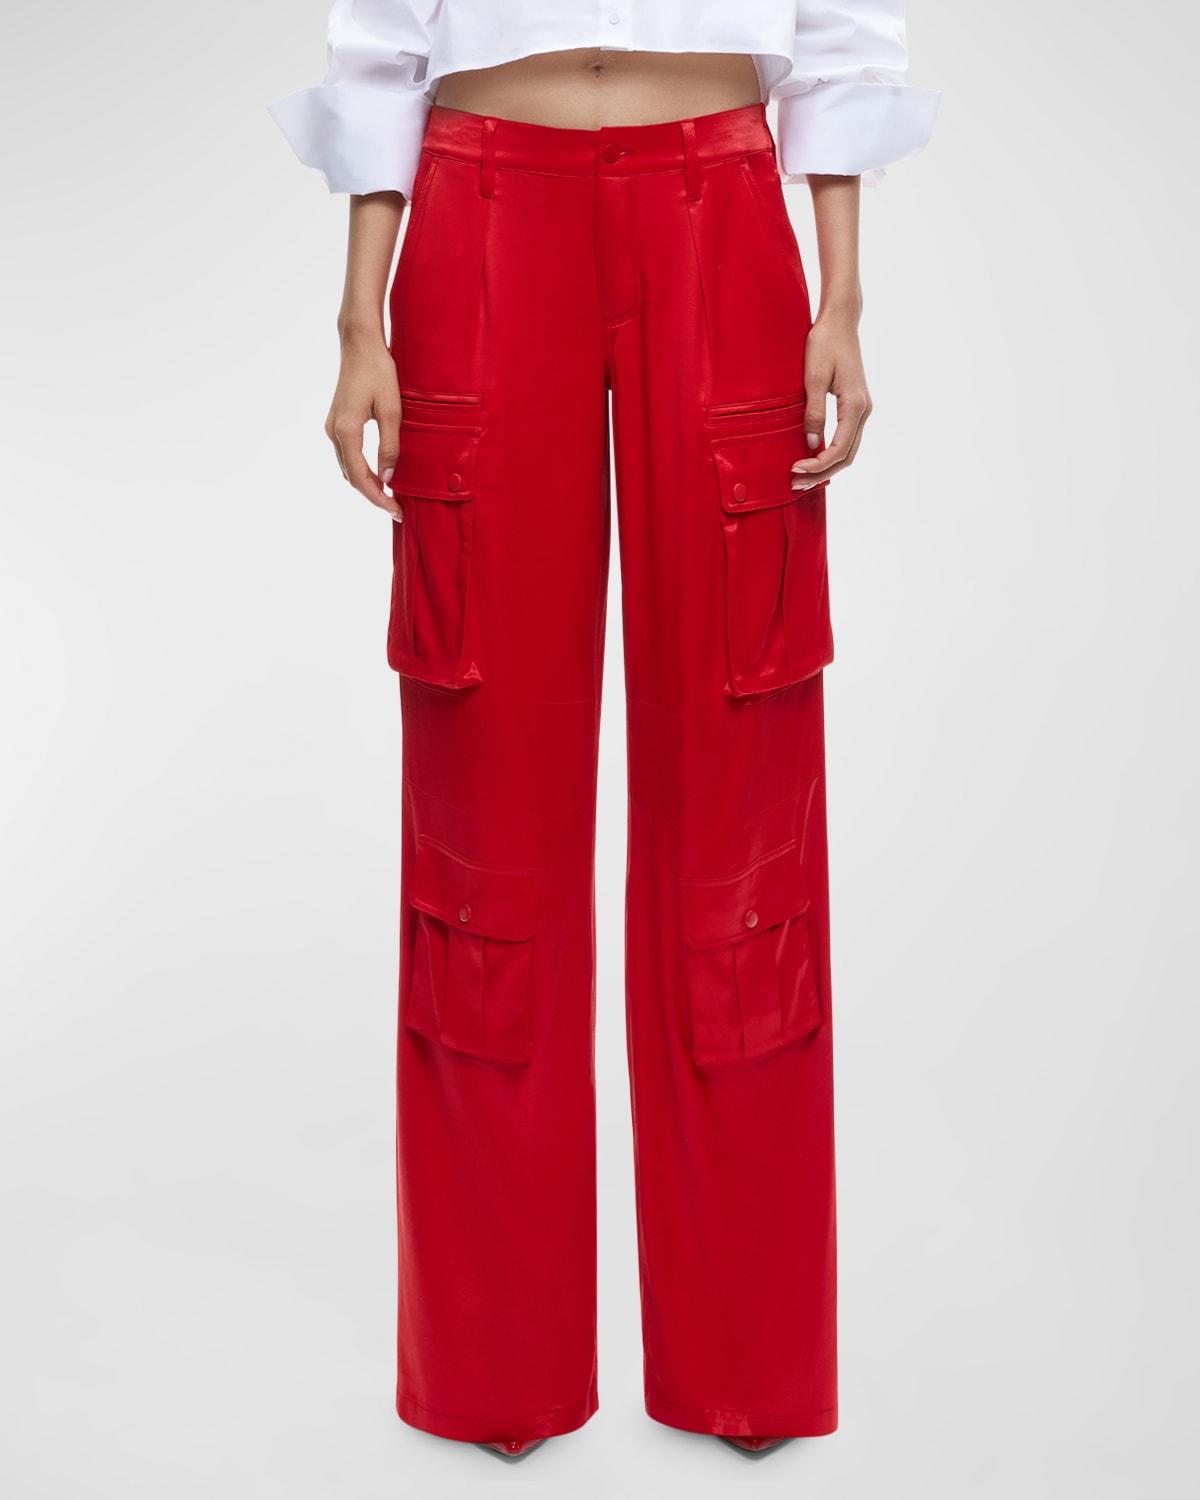 Alice + Olivia Joette Low-rise Satin Cargo Pants in Red | Lyst